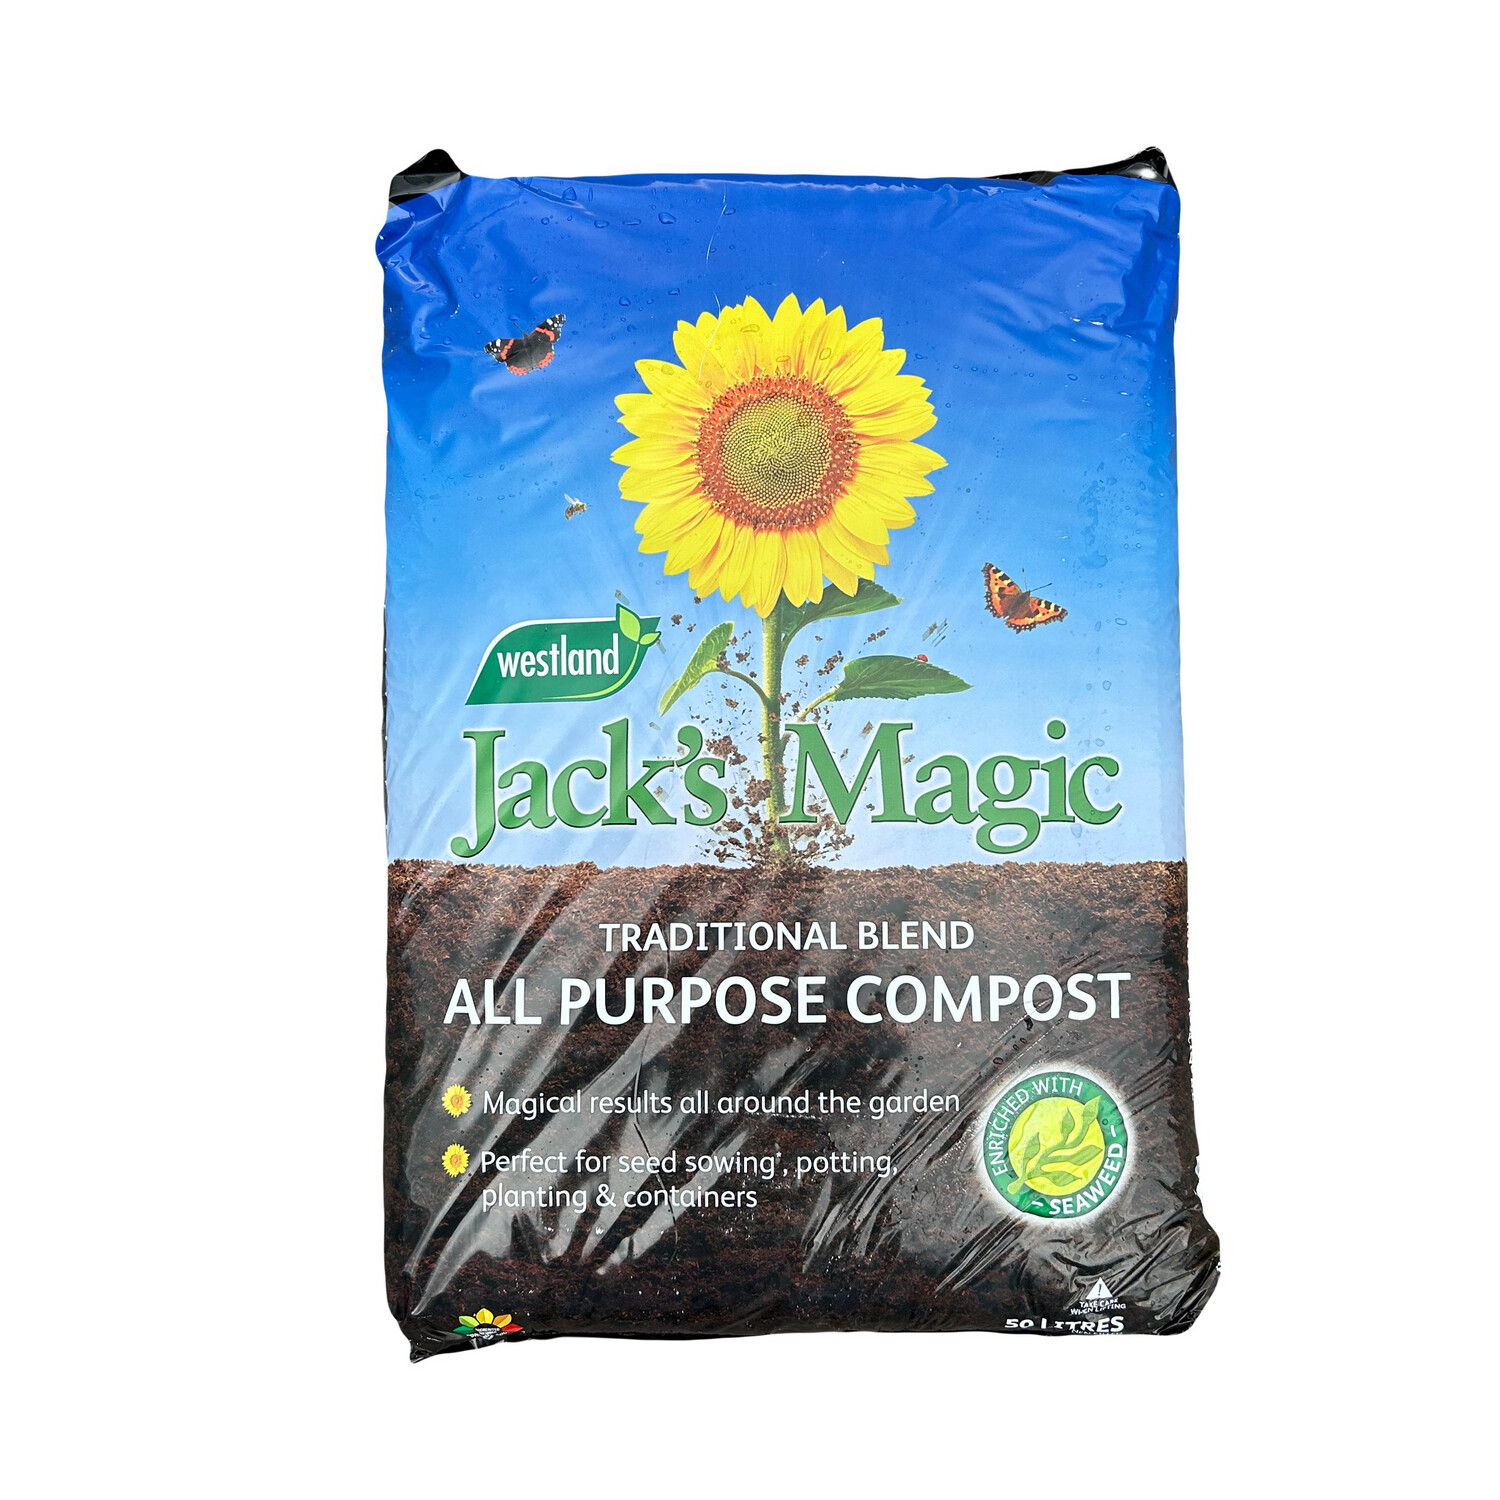 JACKS MAGIC ALL PURPOSE COMPOST, Quantity: 1 Bag